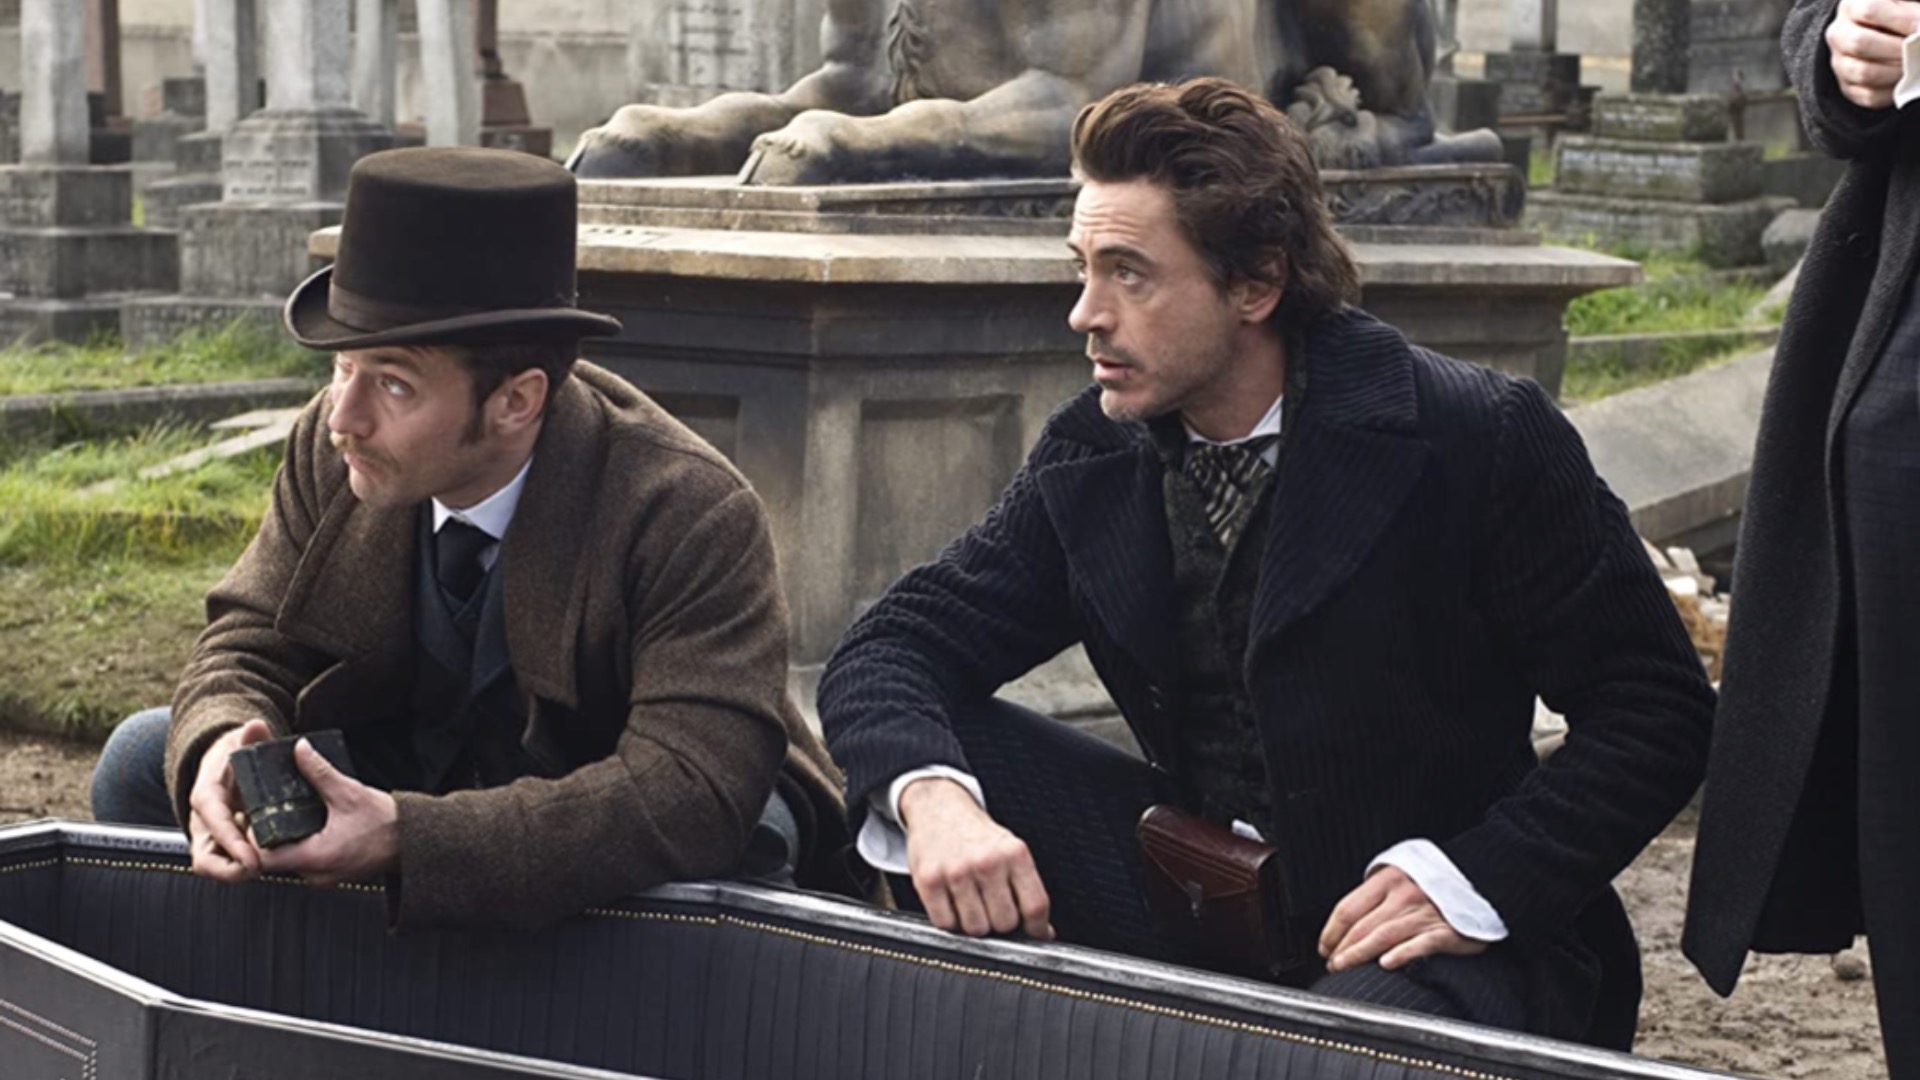 Sherlock Holmes TV series reportedly in the works from Robert Downey Jr. |  GamesRadar+